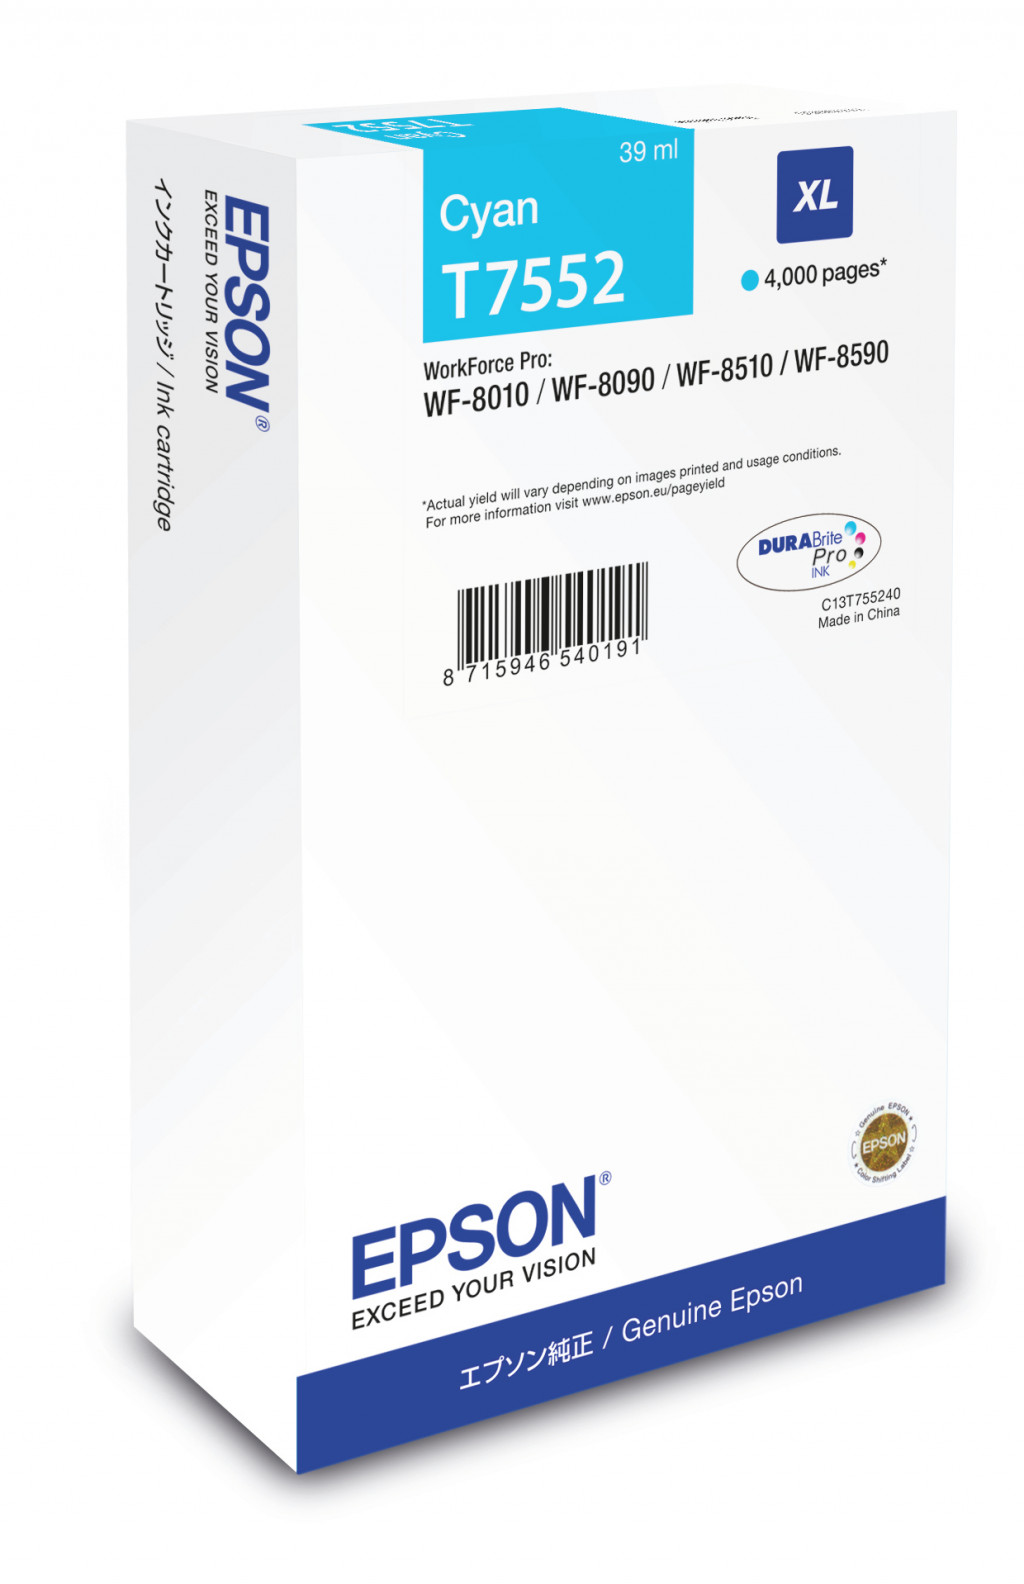 Ink cartridge Epson T7552 XL (C13T755240) CY 4K COMPATIBLE